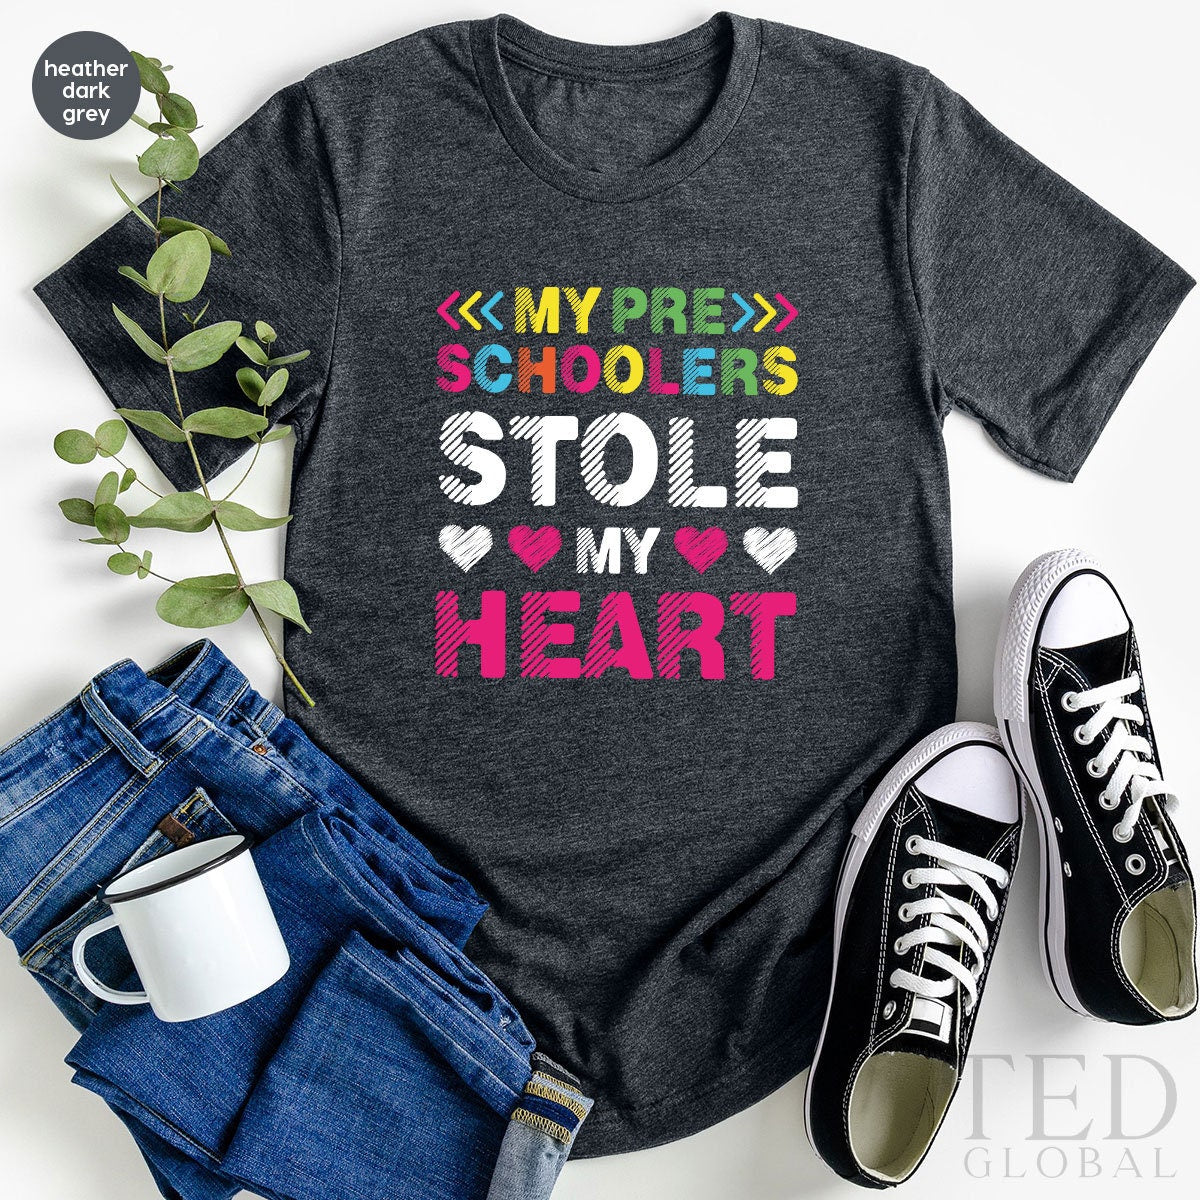 My Preschooler Shirt, Funny Preschool Shirts, Cute School T-Shirt, Gift For Preschool - Fastdeliverytees.com